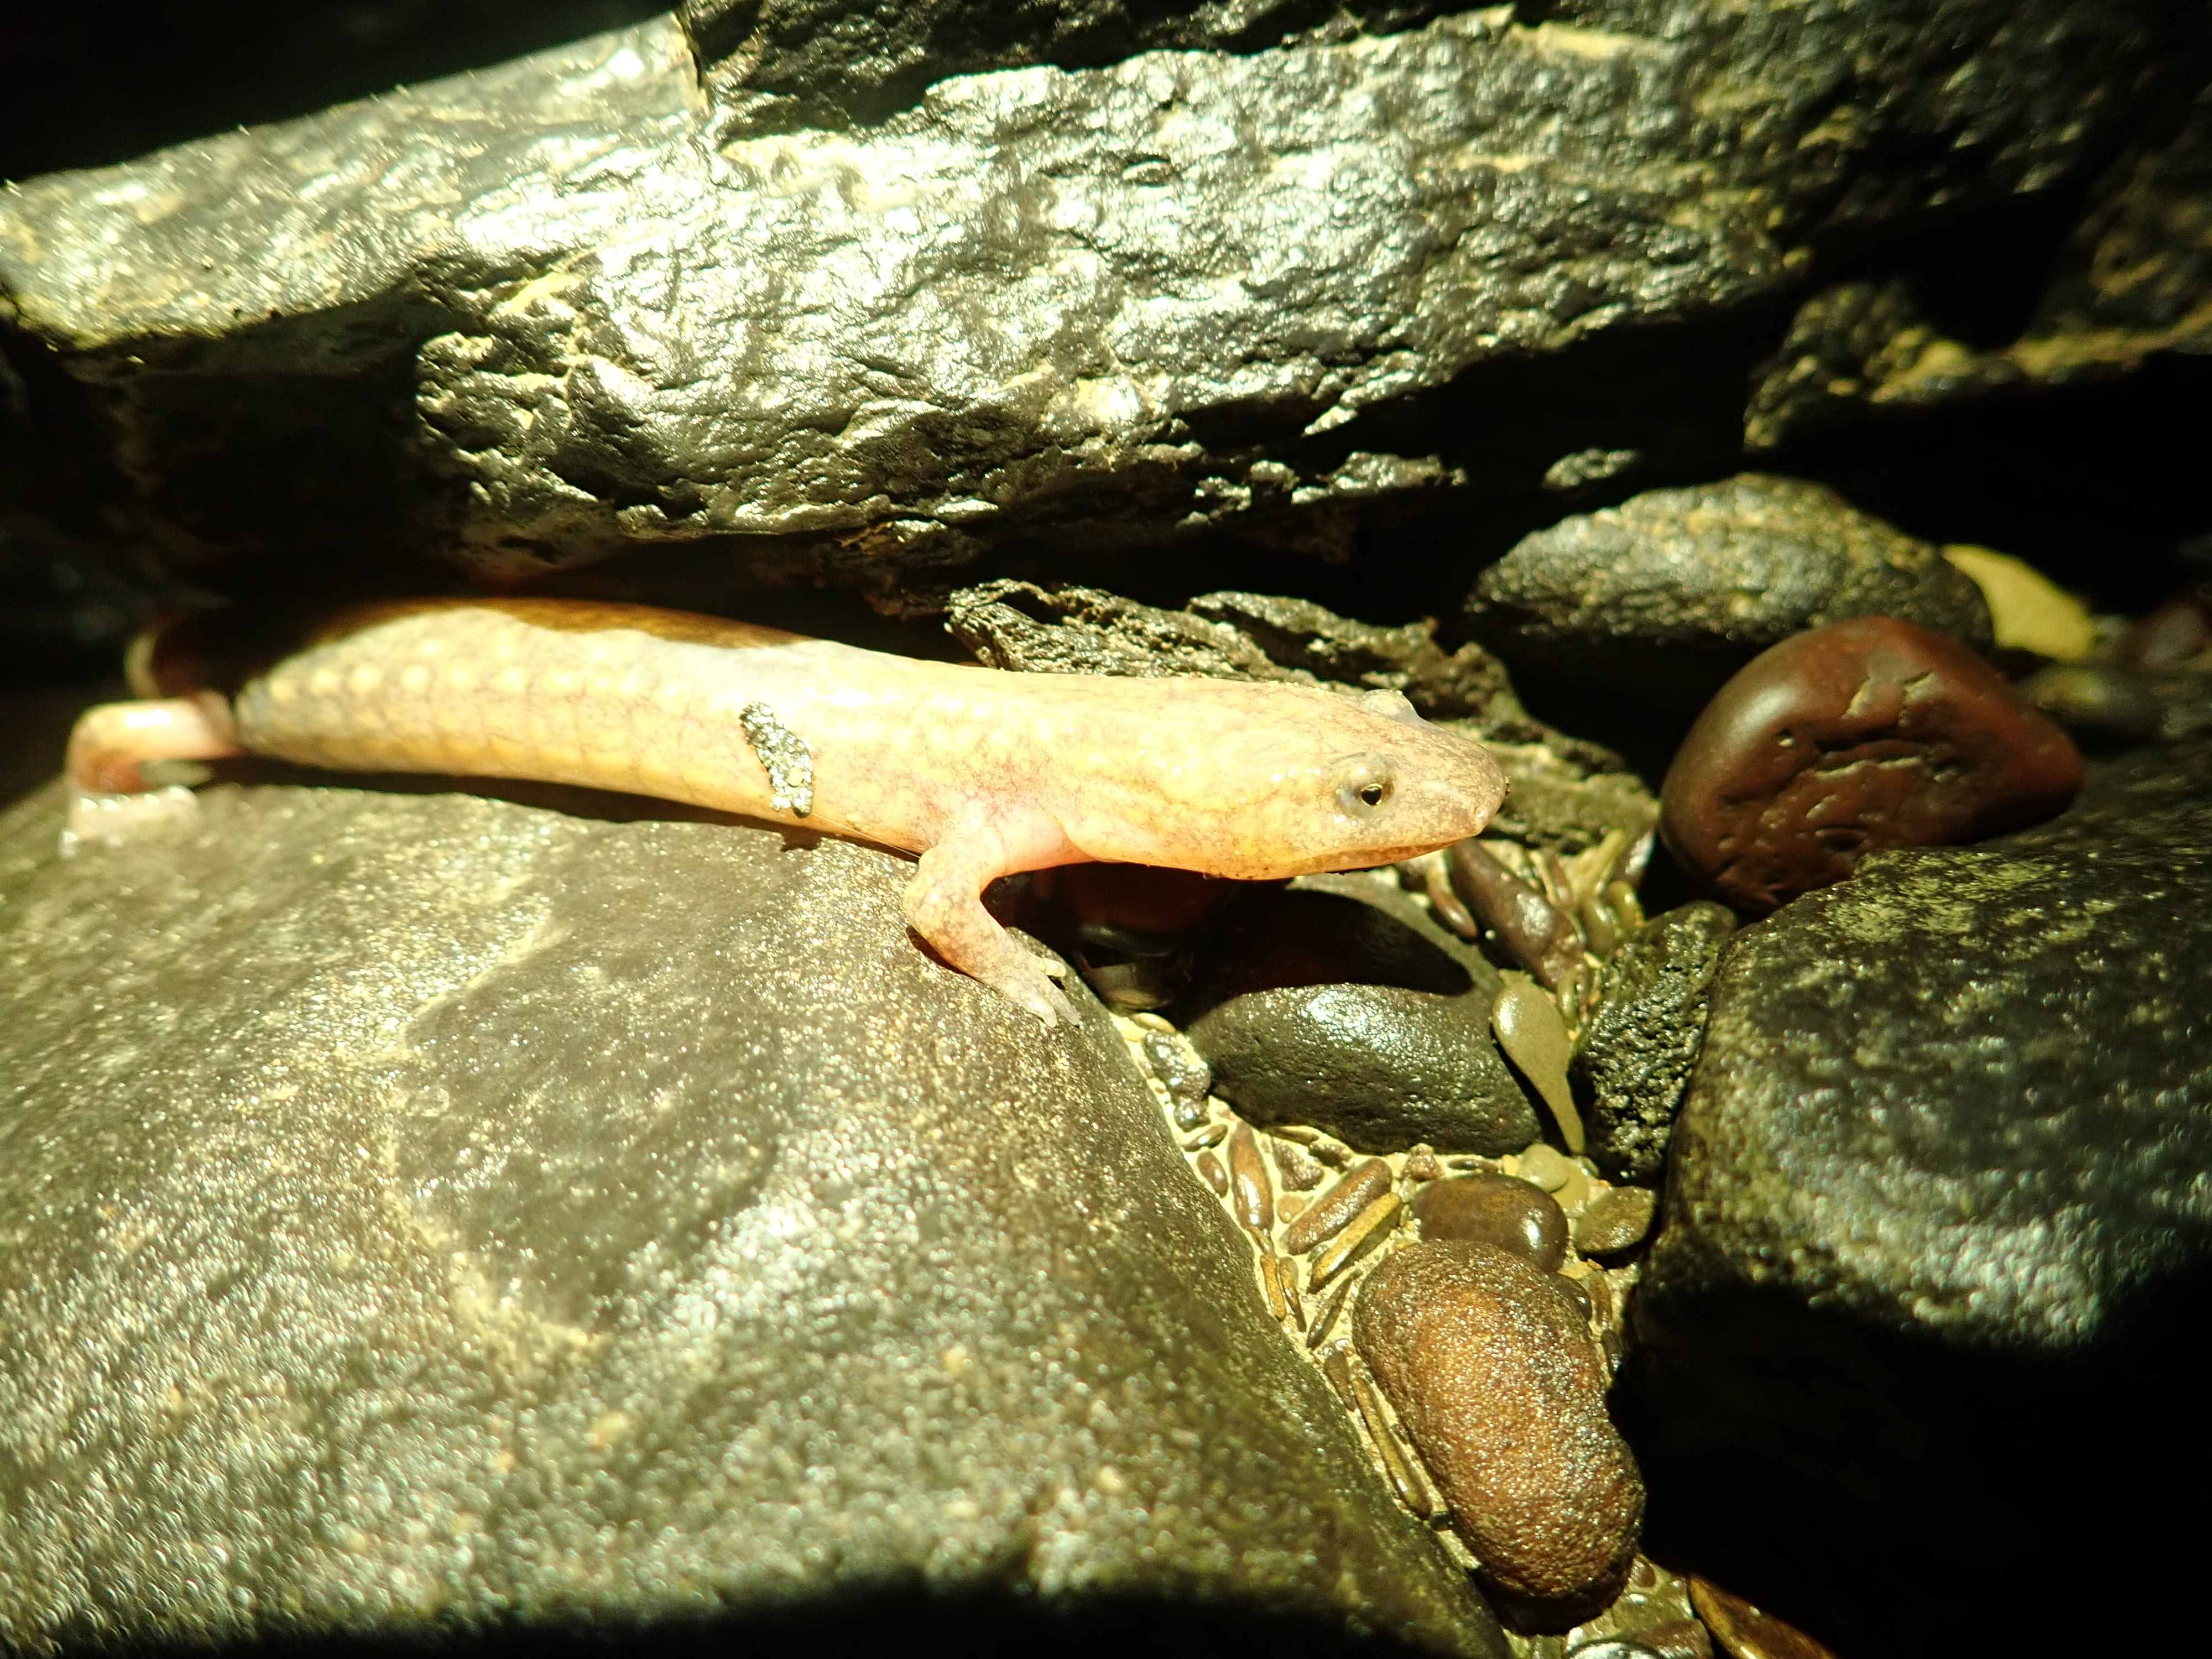 WV spring salamander (<em>Gyrinophilus subterraneus[/])<br />Photo by: Evan Grant